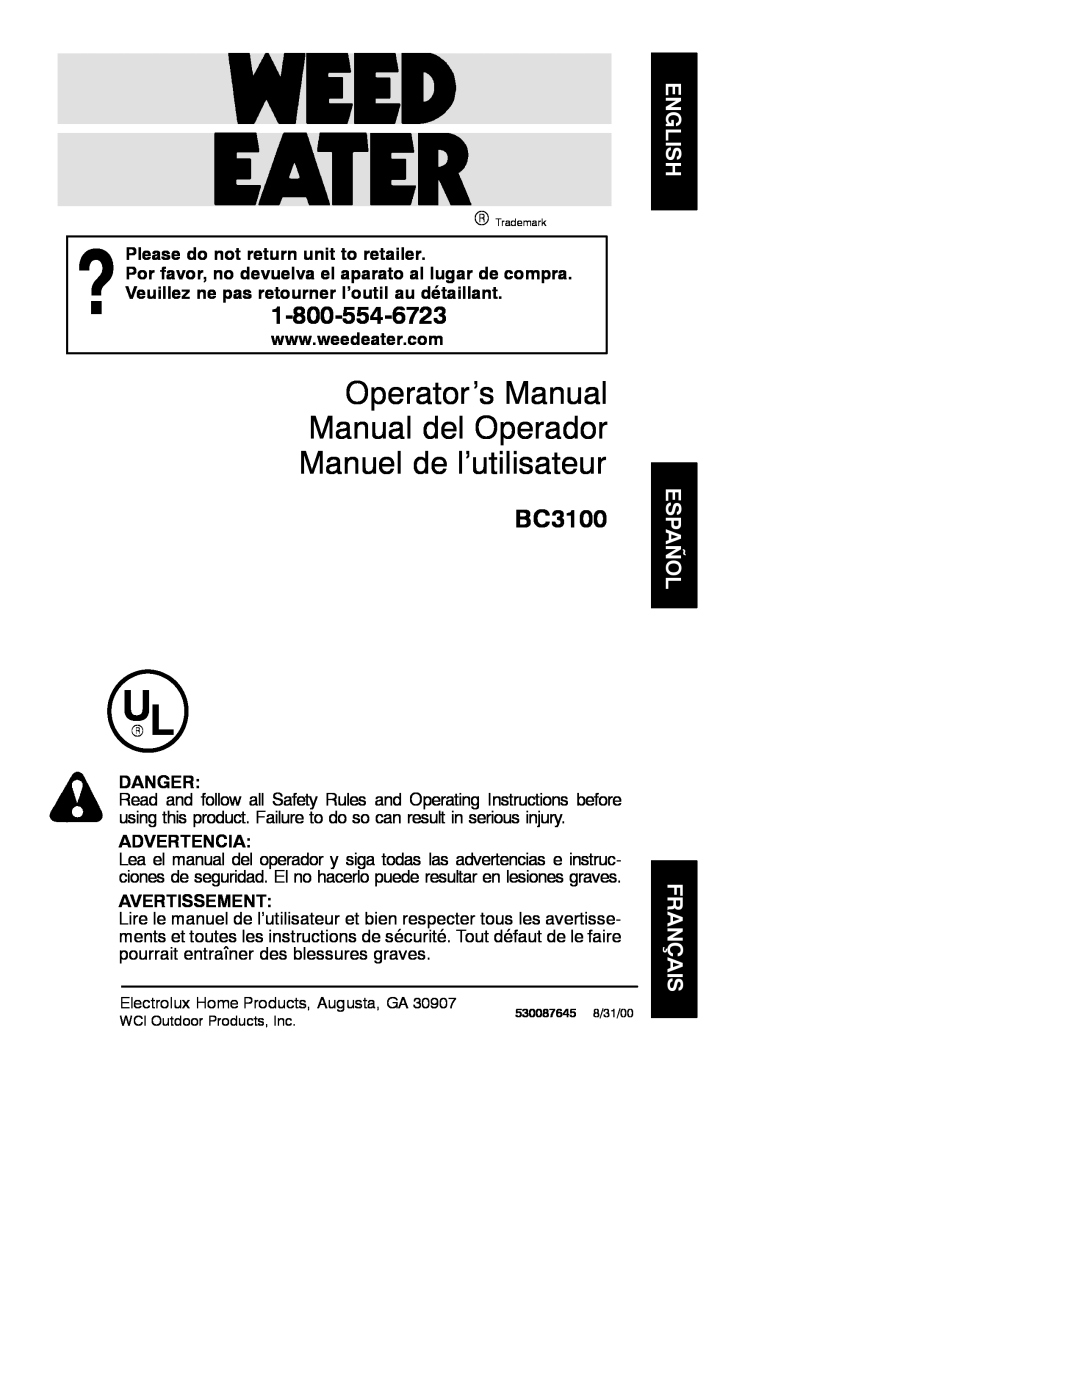 Weed Eater 530087645 manual Operator’s Manual Manual del Operador Manuel de l’utilisateur, BC3100, Danger, Advertencia 